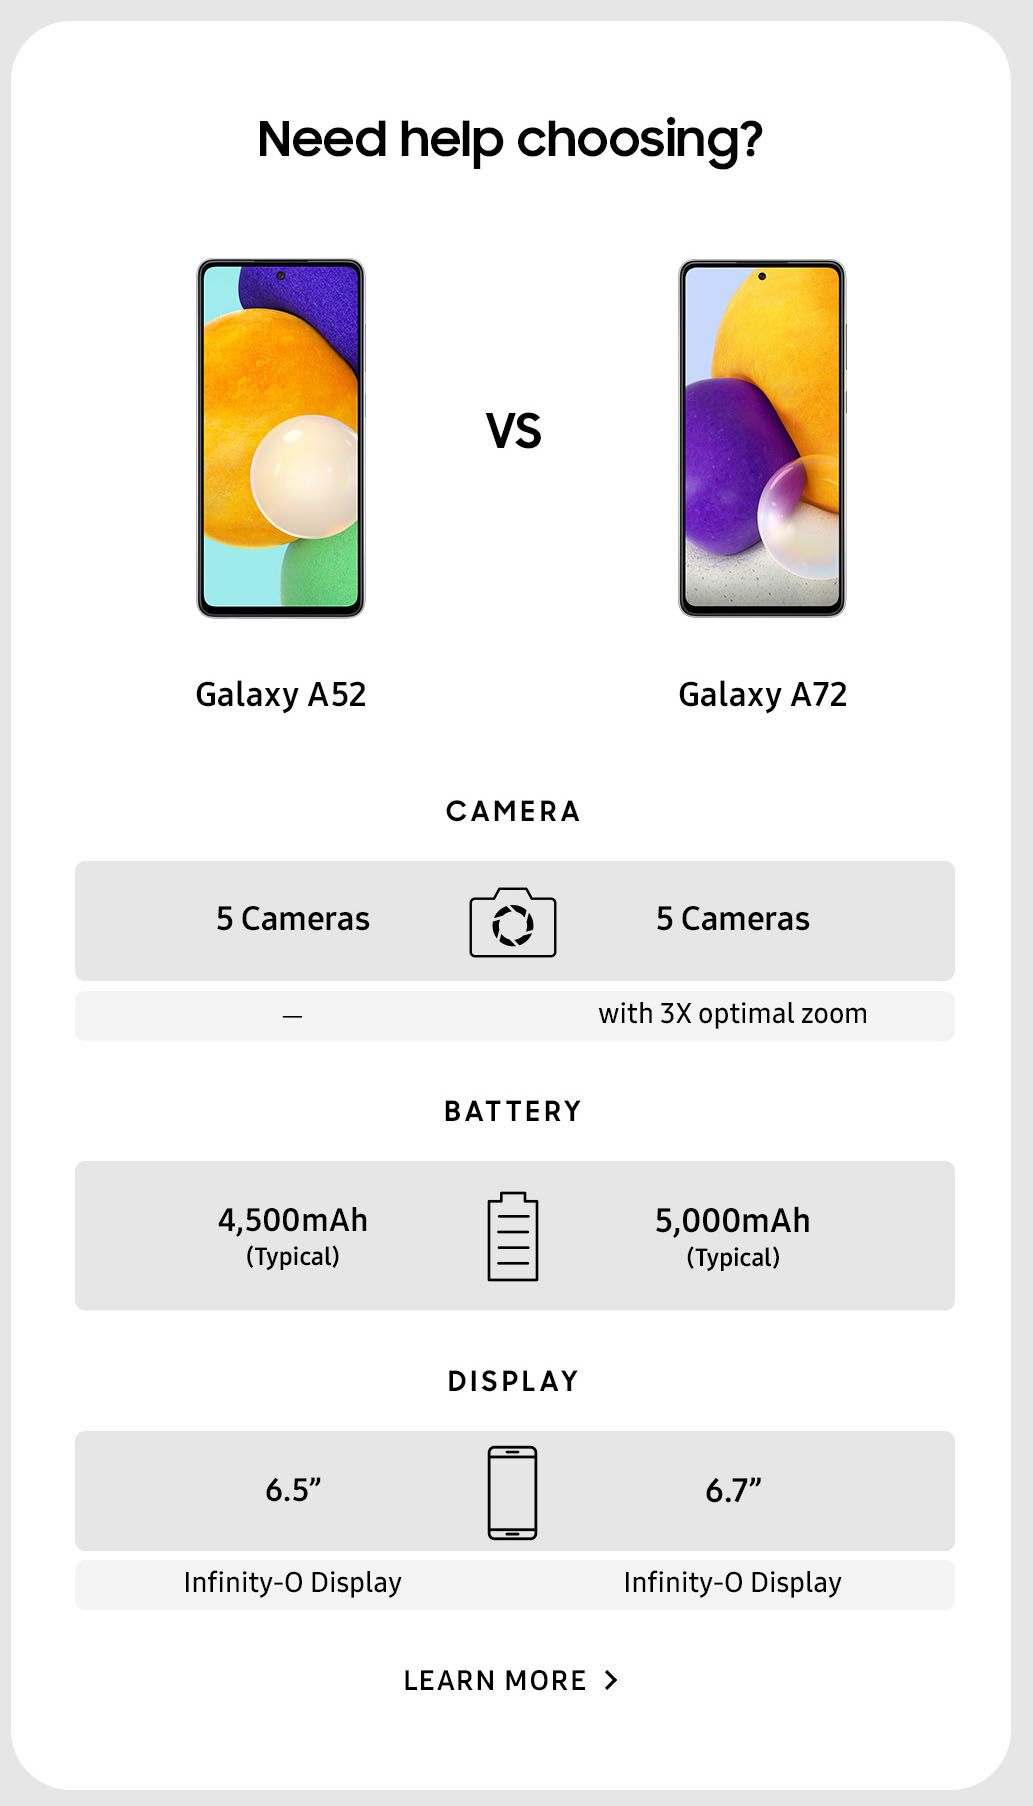 A52 samsung Samsung Galaxy